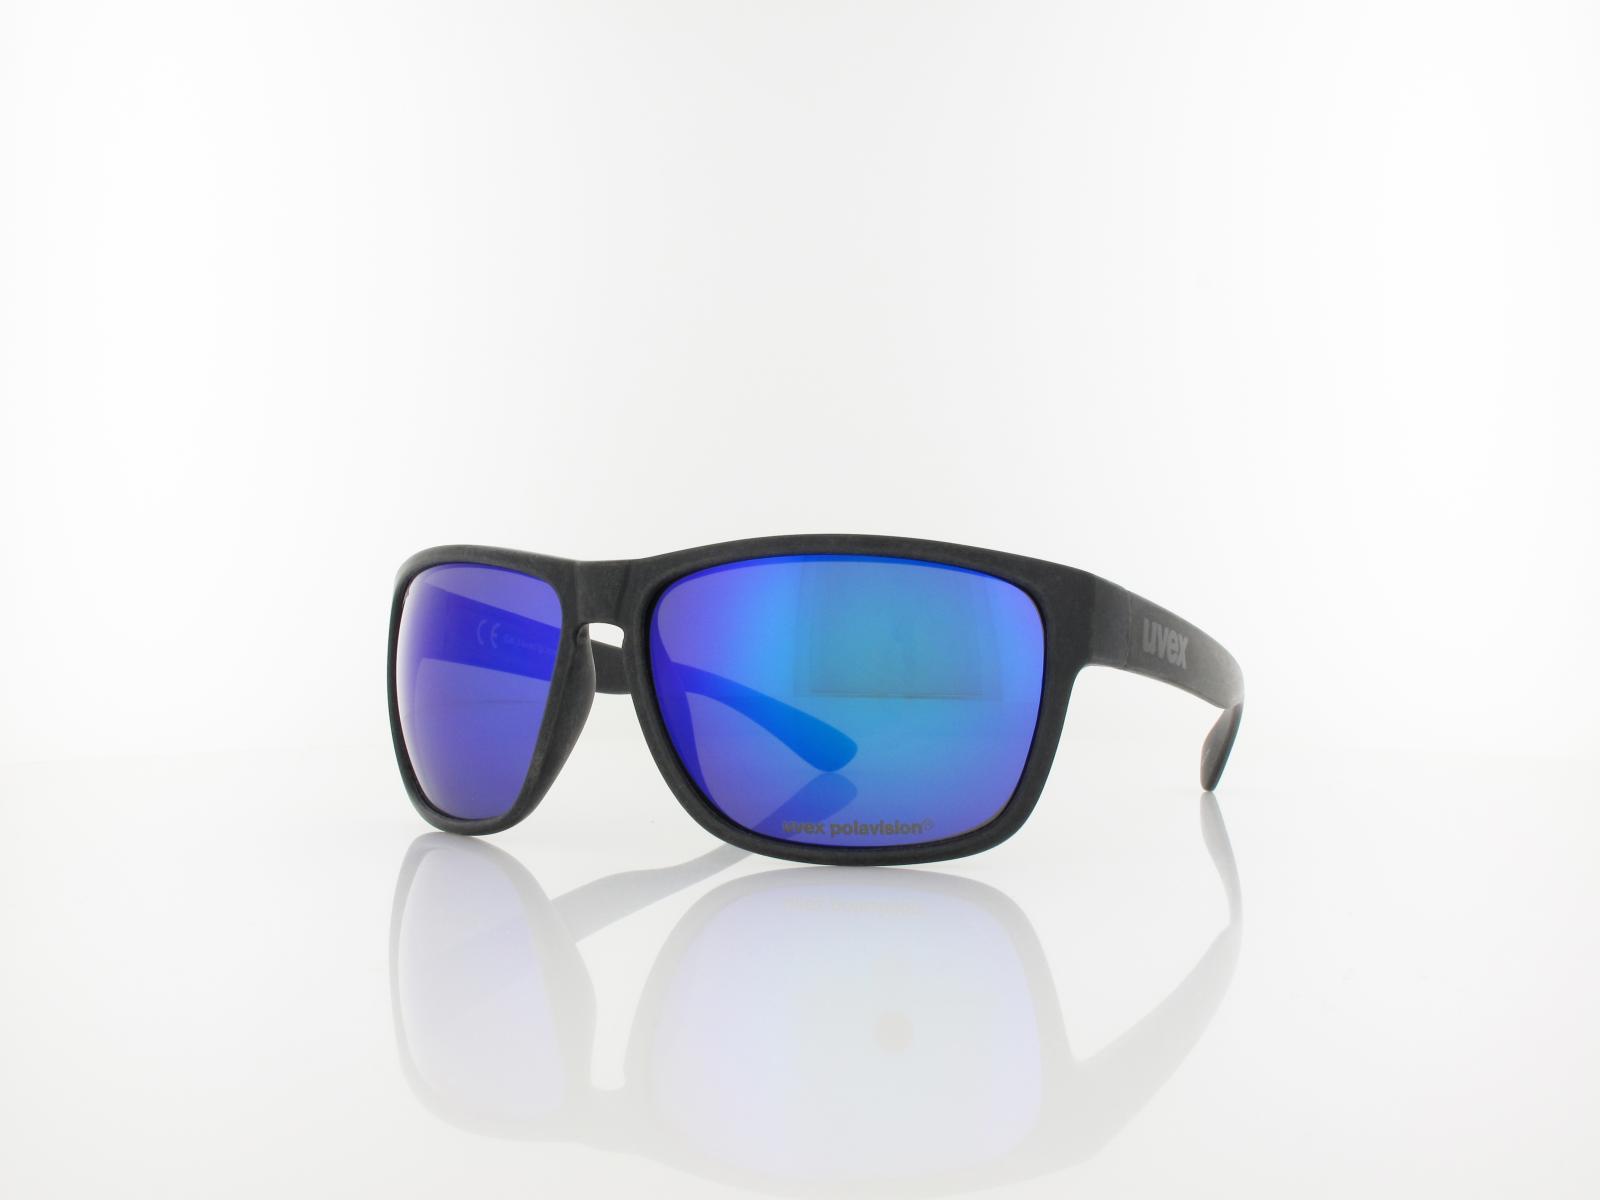 UVEX | LGL ocean P S532088 2240 60 | black mat / polavision mirror blue